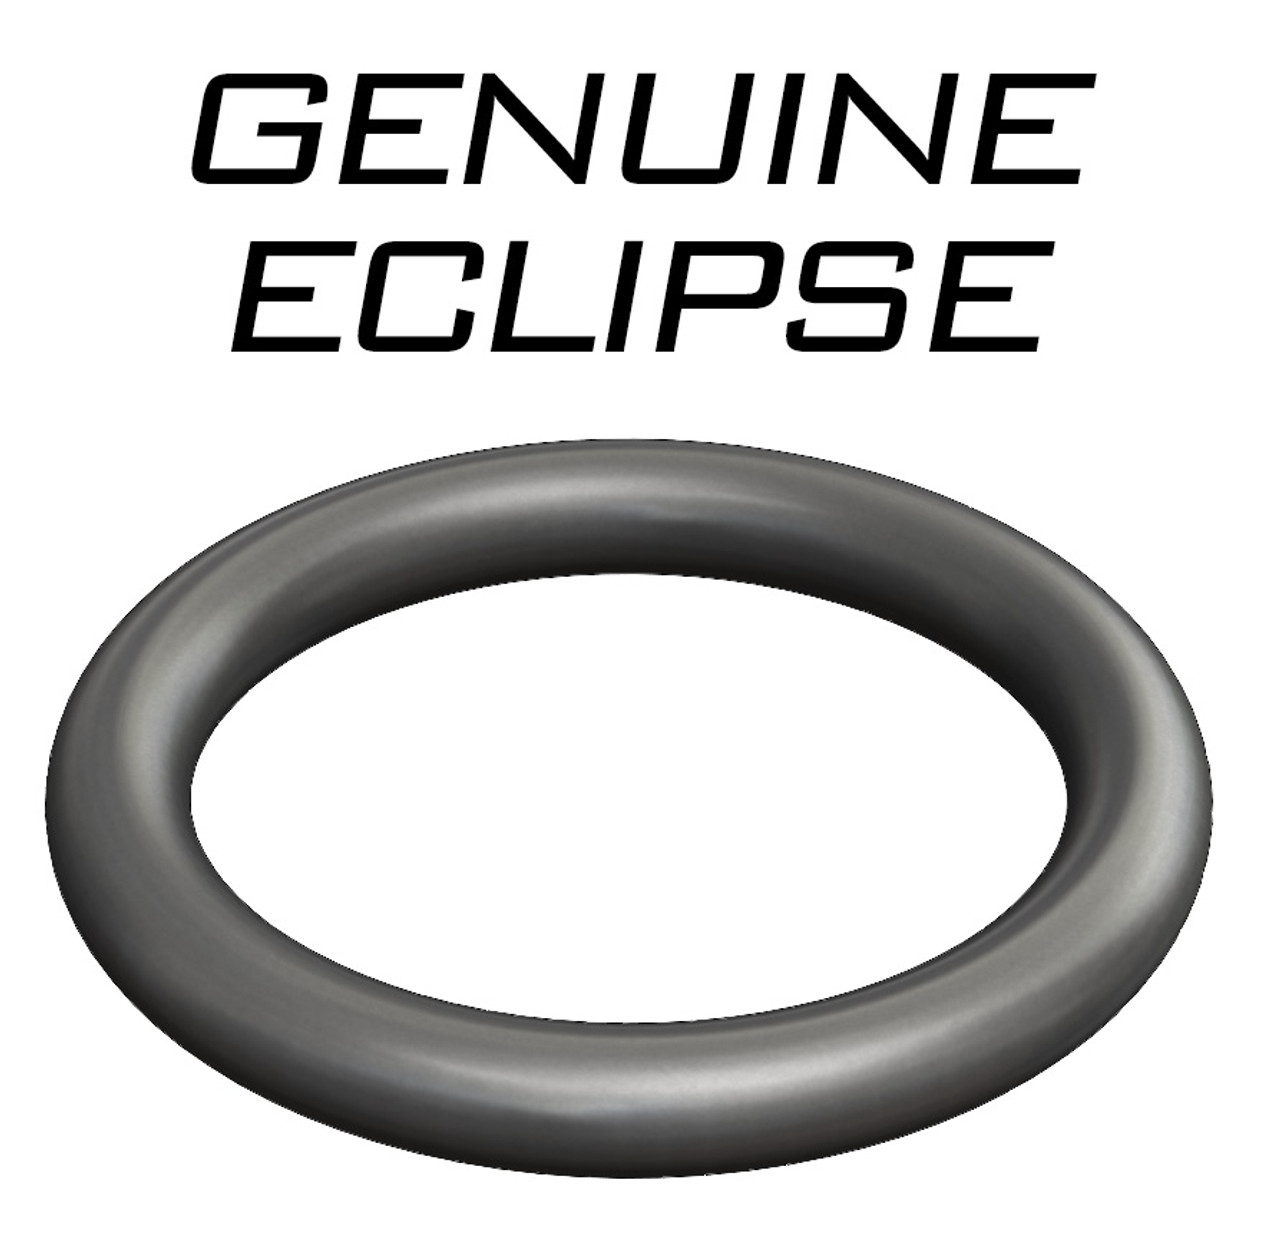 Eclipse - Oring - 006 NBR70